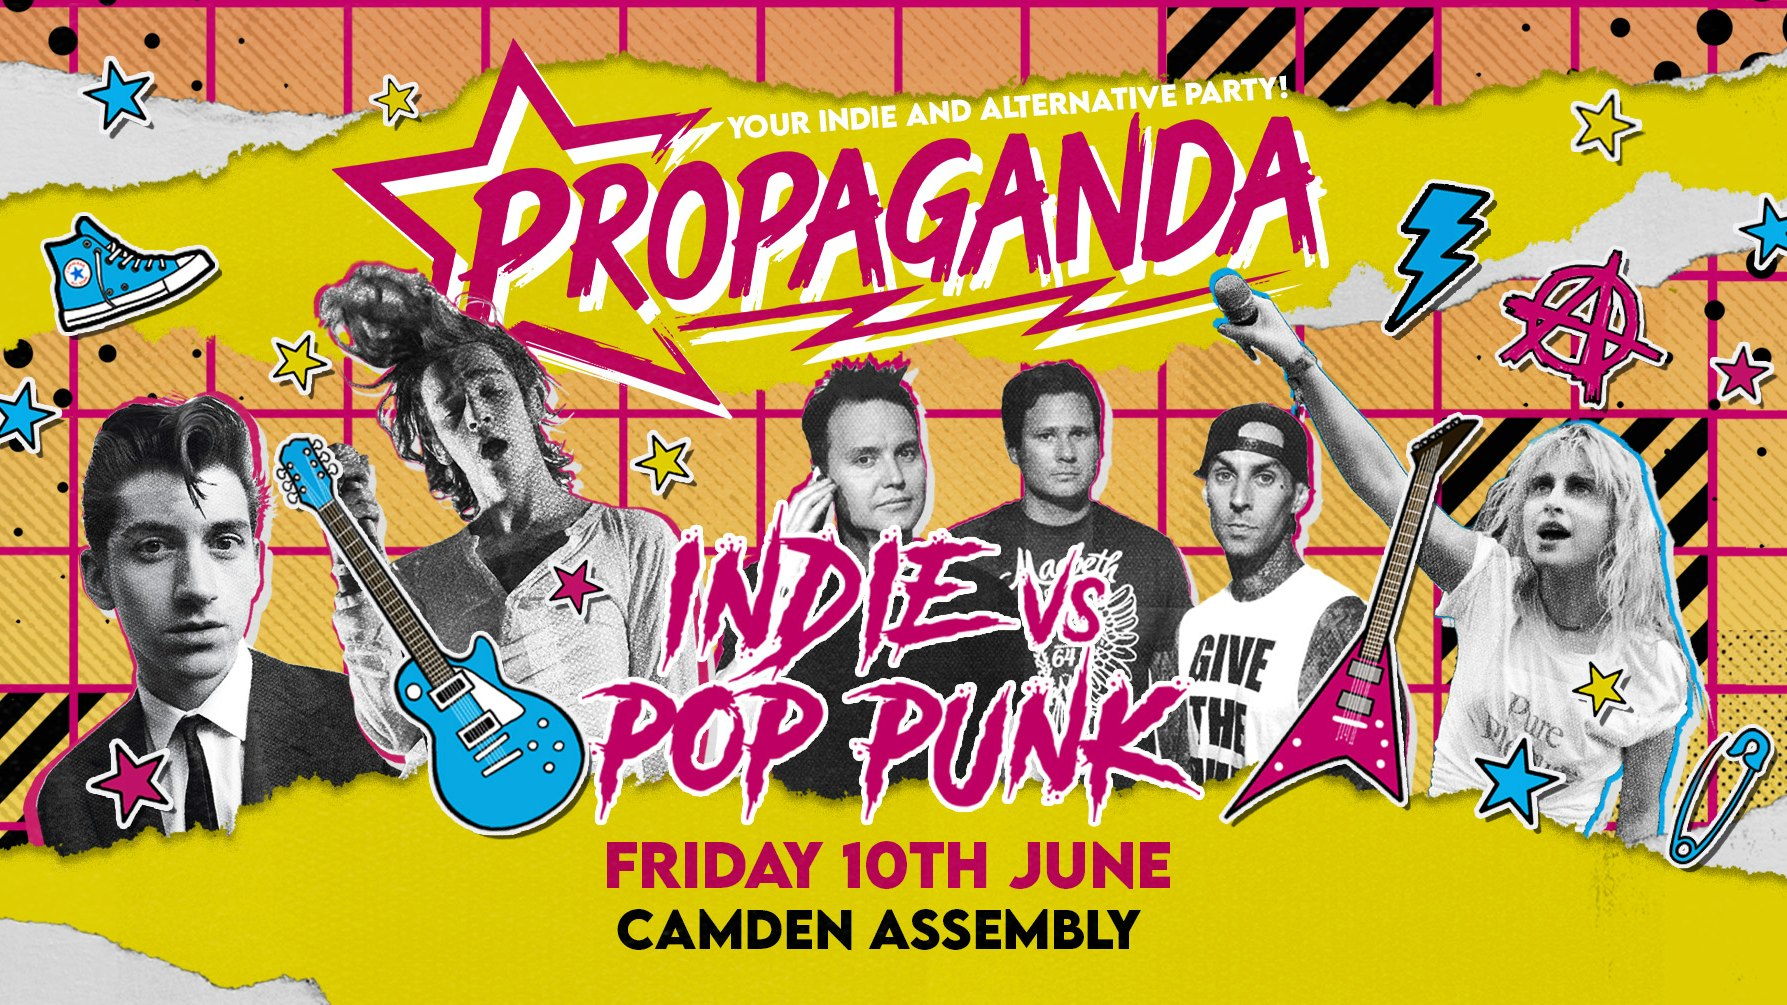 Propaganda London – Indie VS Pop-Punk!